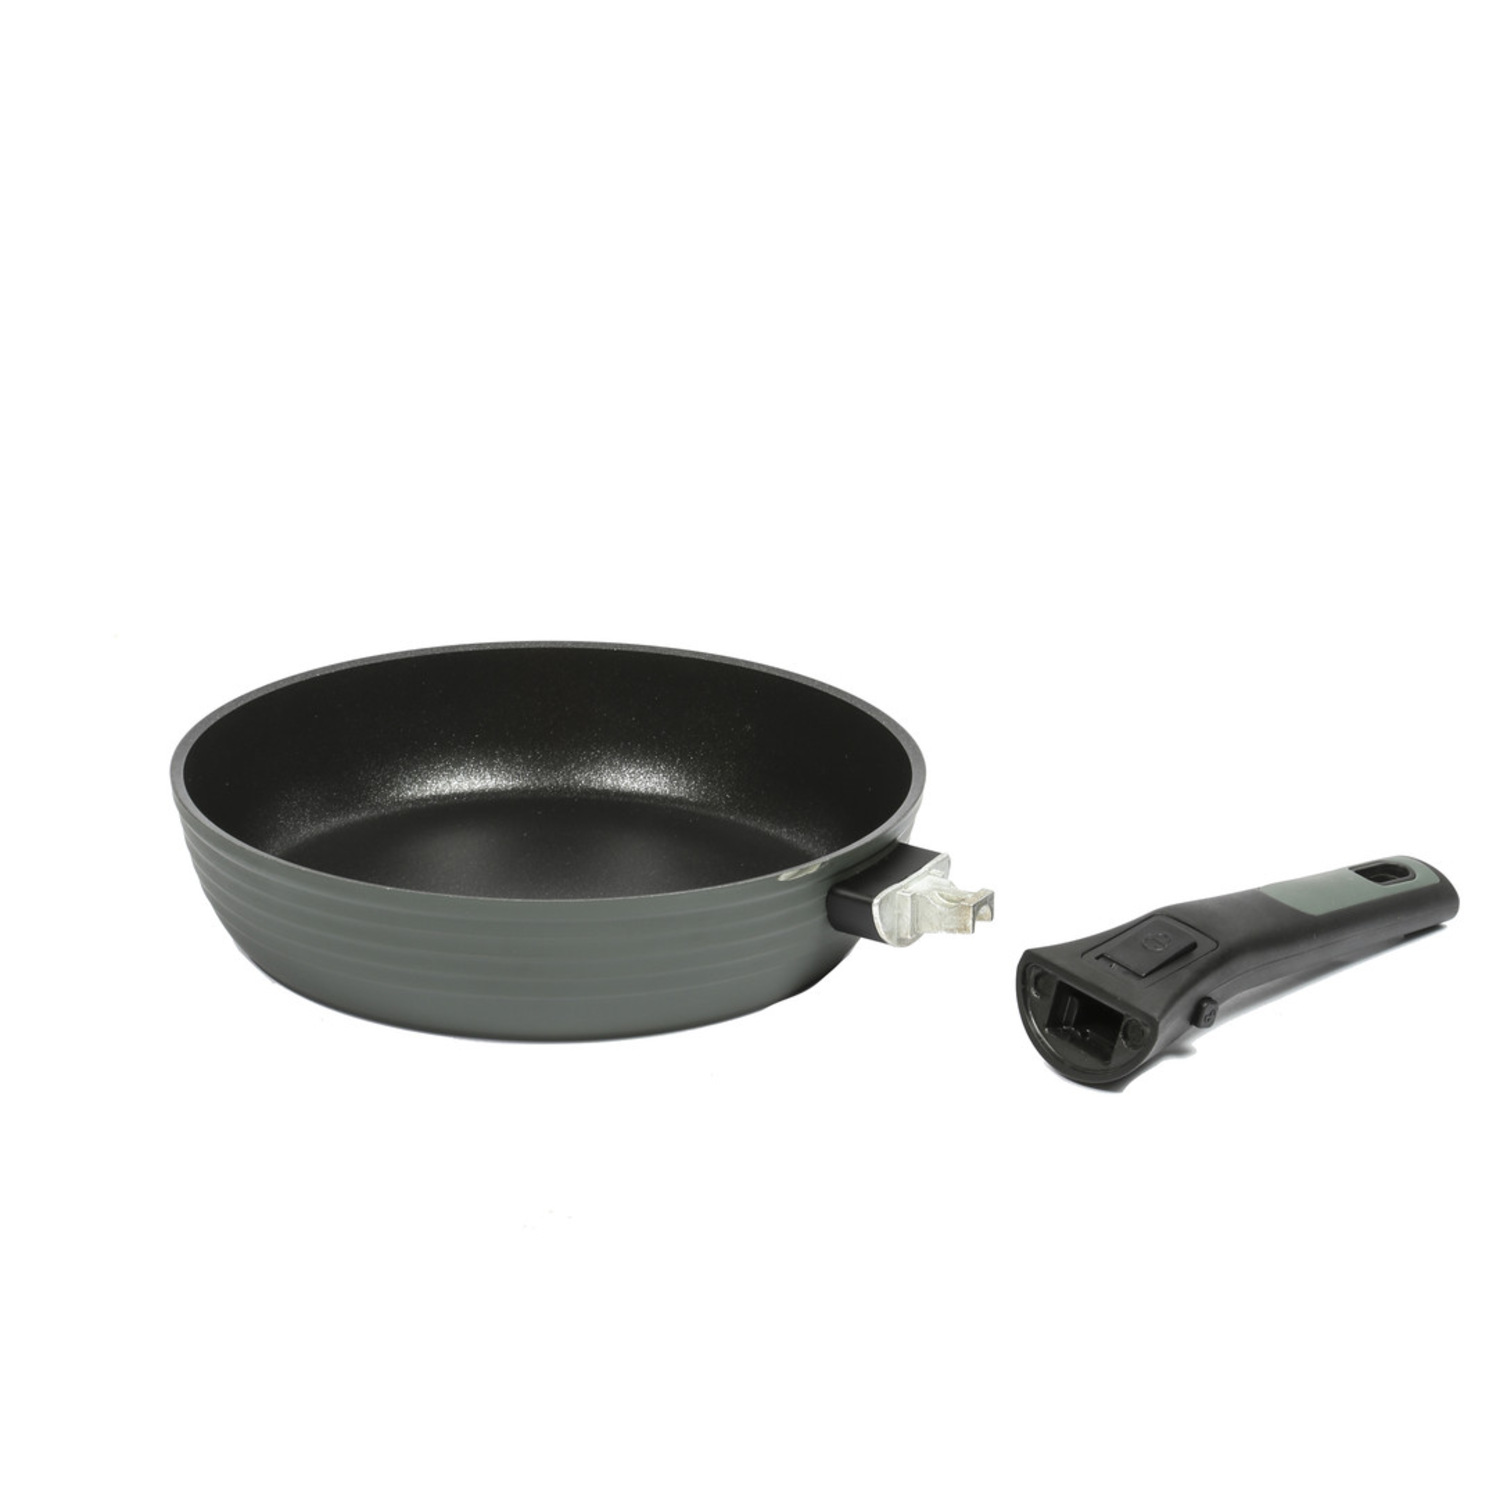 Fissman 9 Pcs Cookware Set - Non Stick Aluminium With Detachable Handles - Oven Safe Xylanplus Coating, Casserole, Frying Pan, Shallow Pot